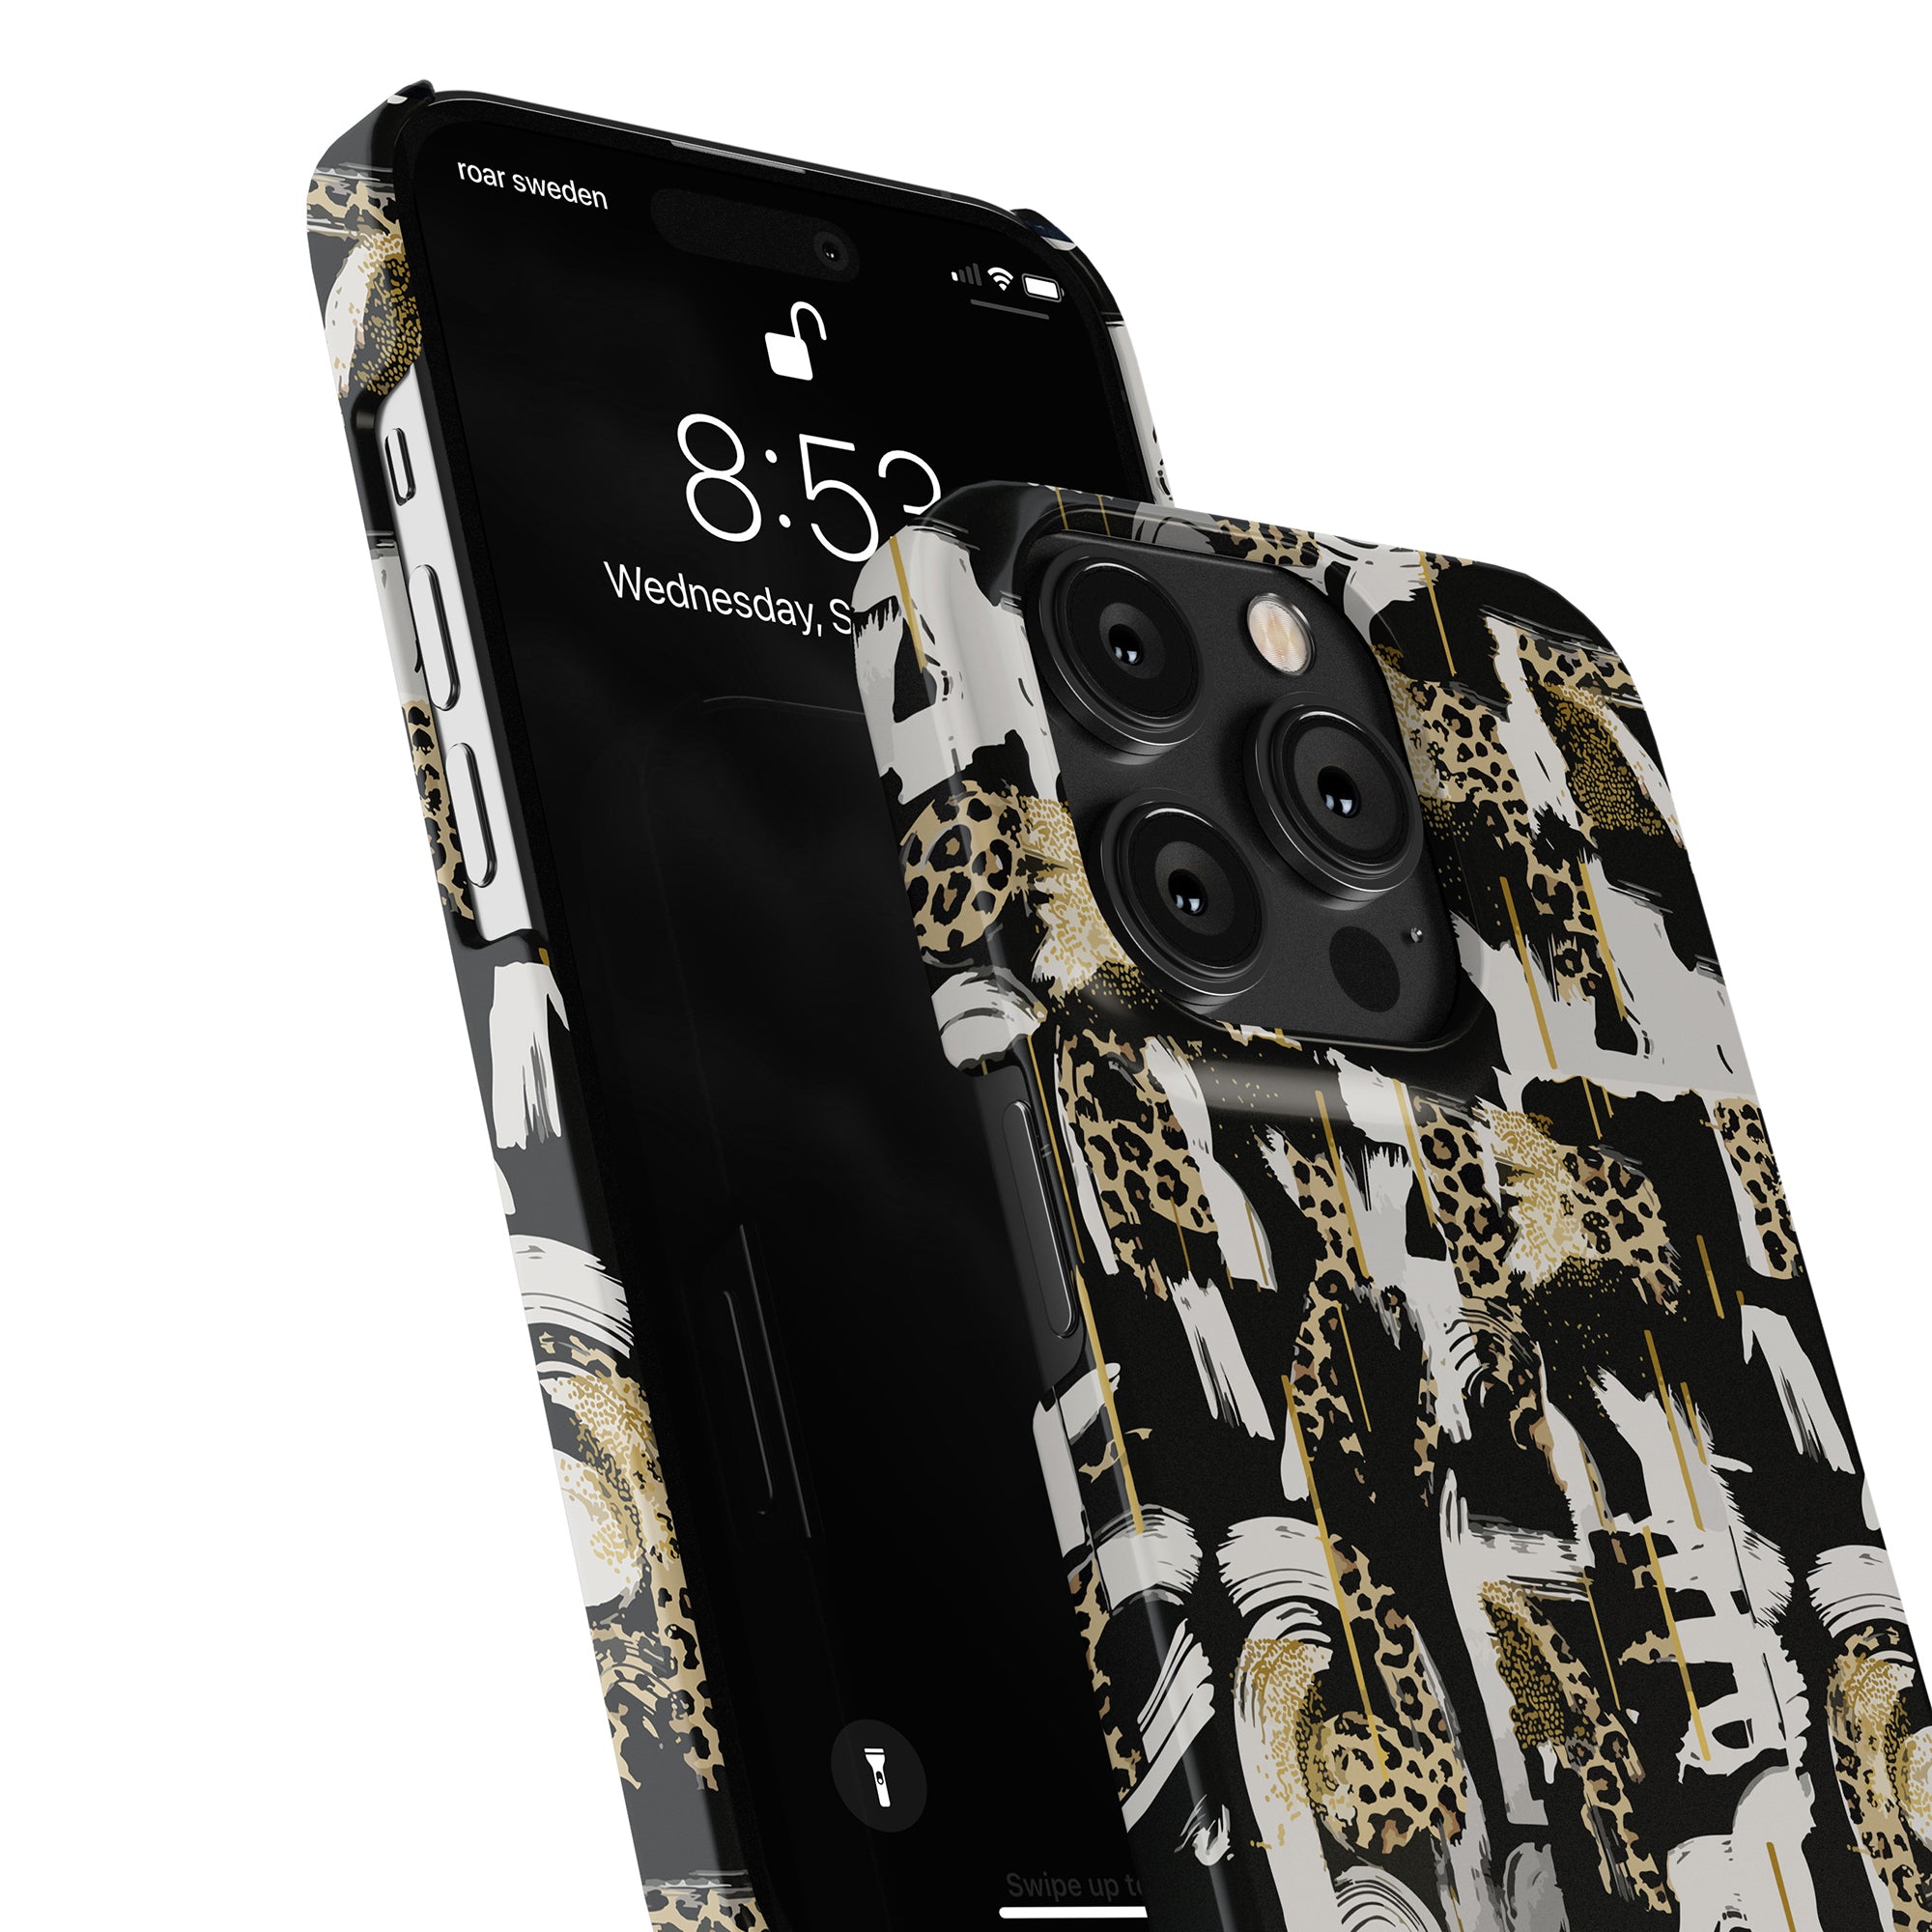 Skate Leo - Slim case description: A black and gold leopard print case for the iPhone 11.